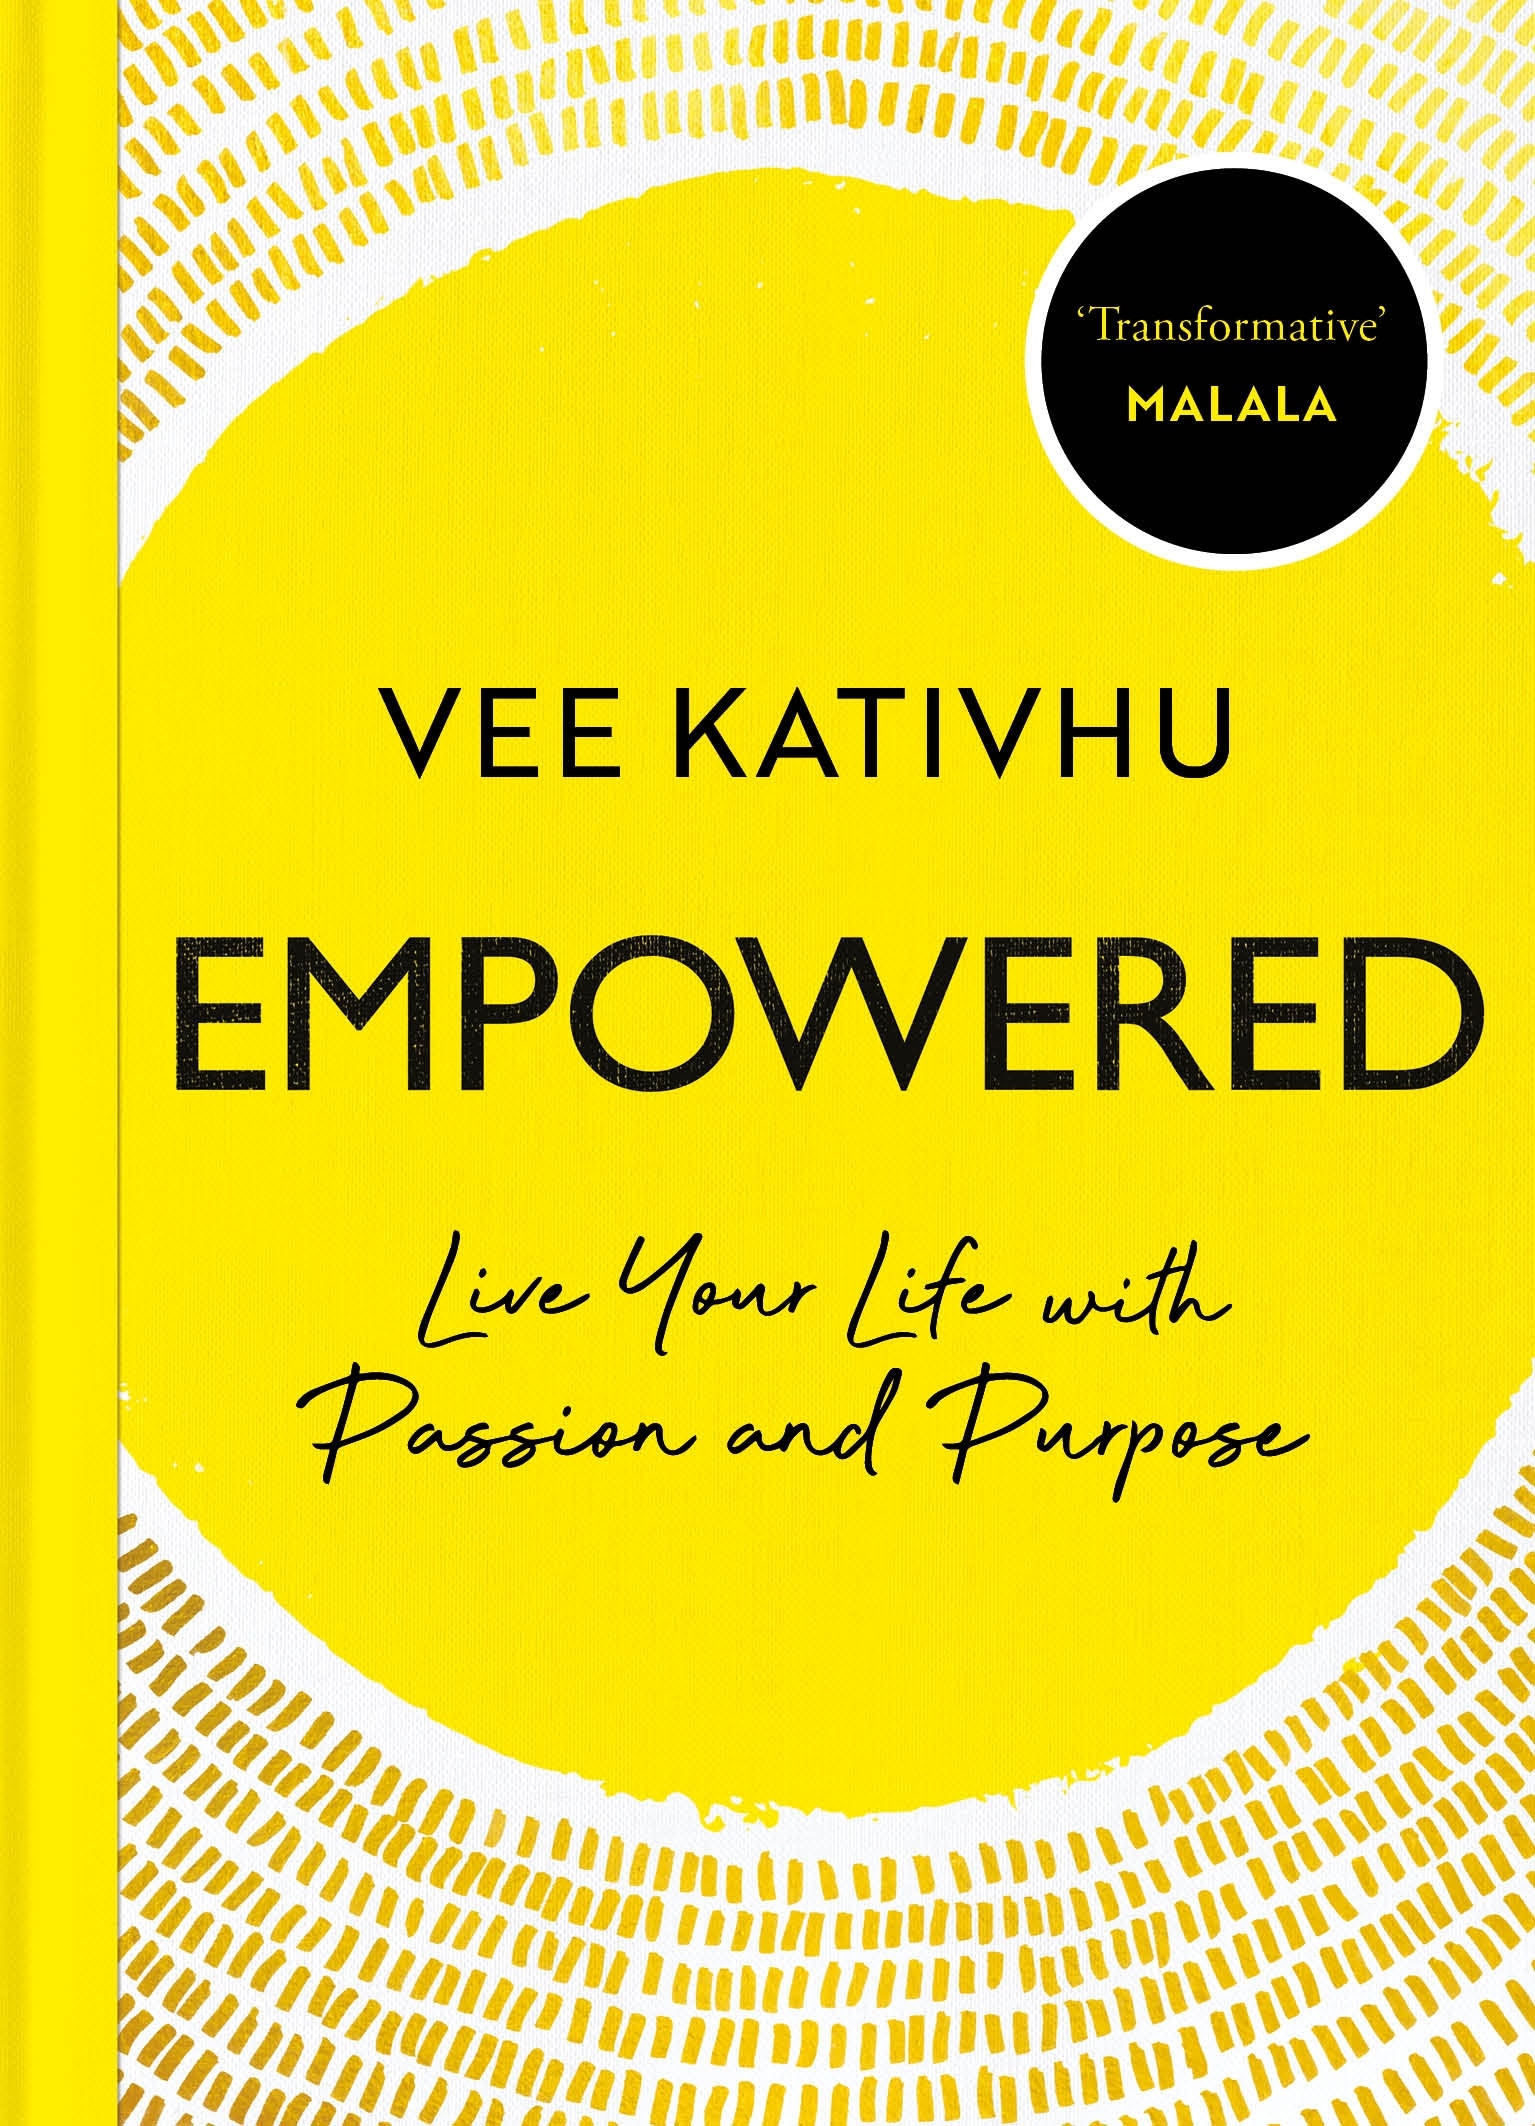 Book “Empowered” by Vee Kativhu — December 2, 2021